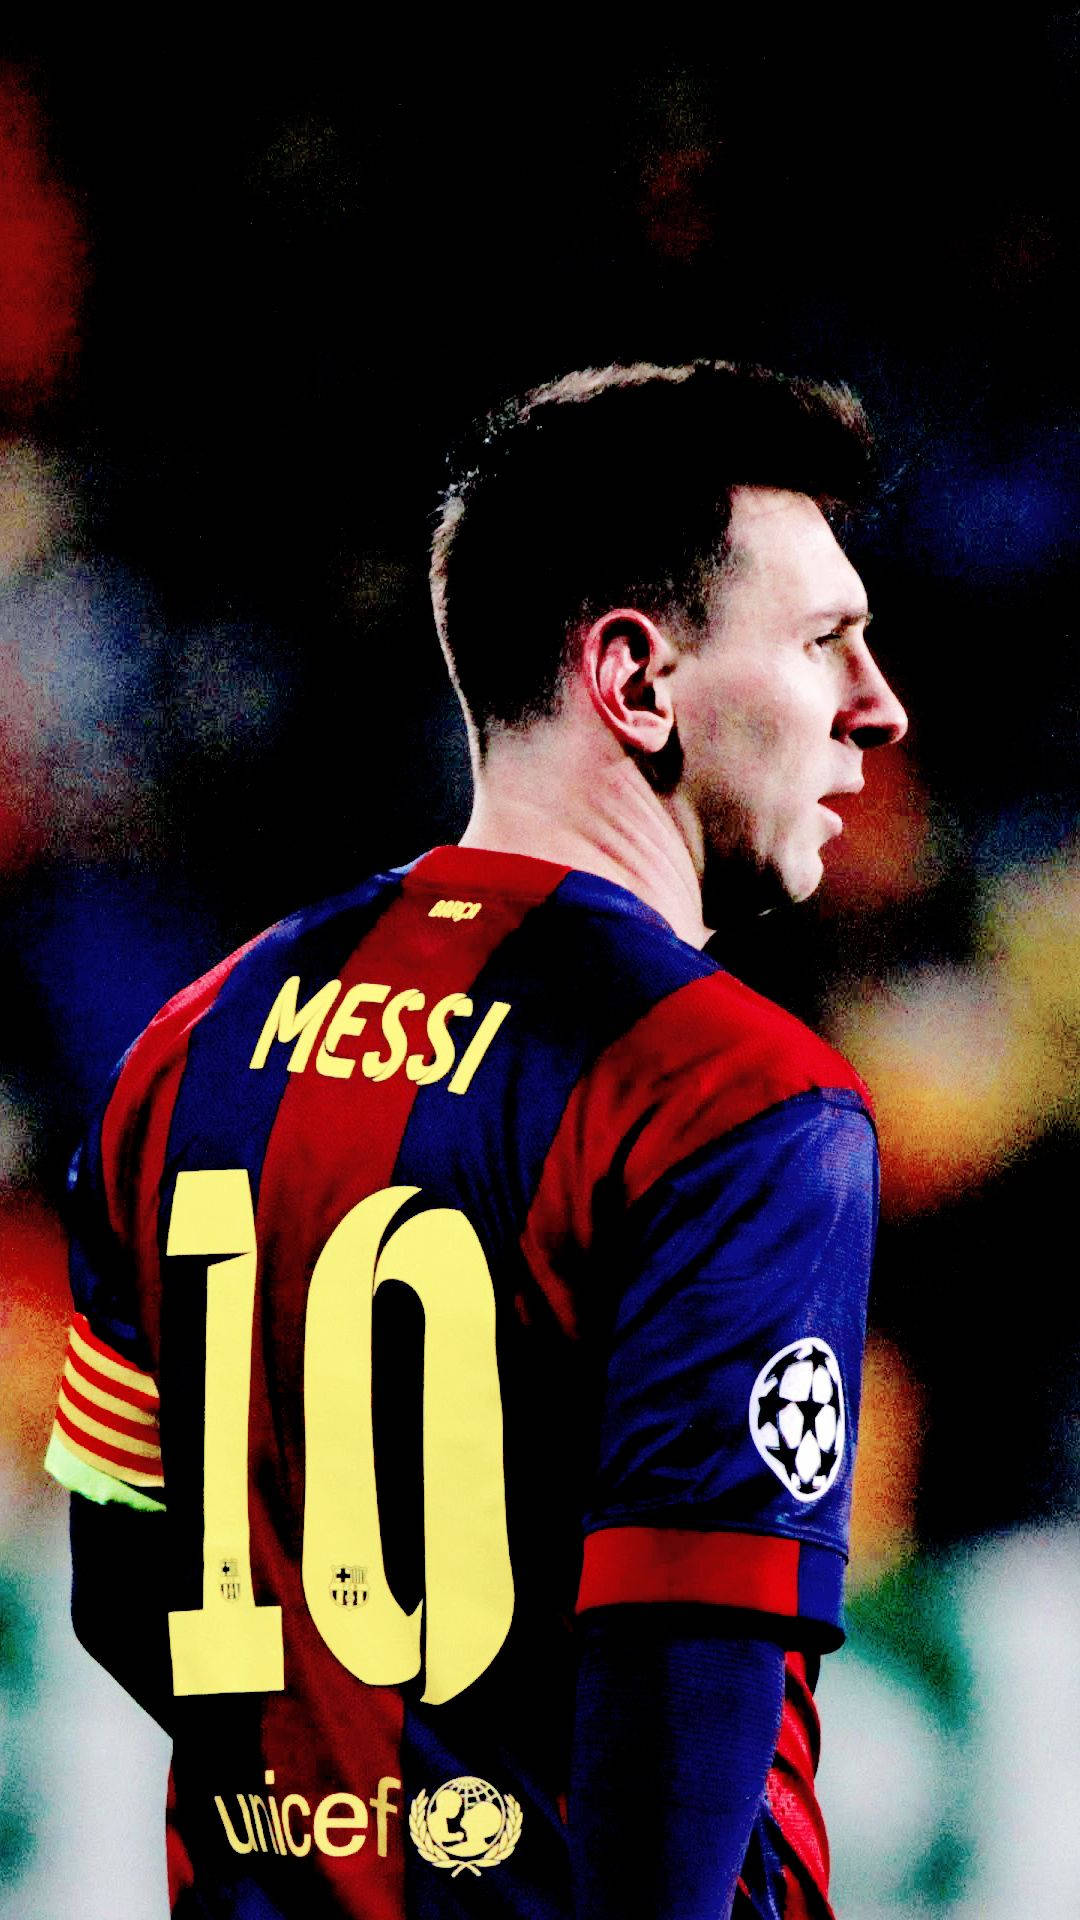 Messi 10 Unicef Background